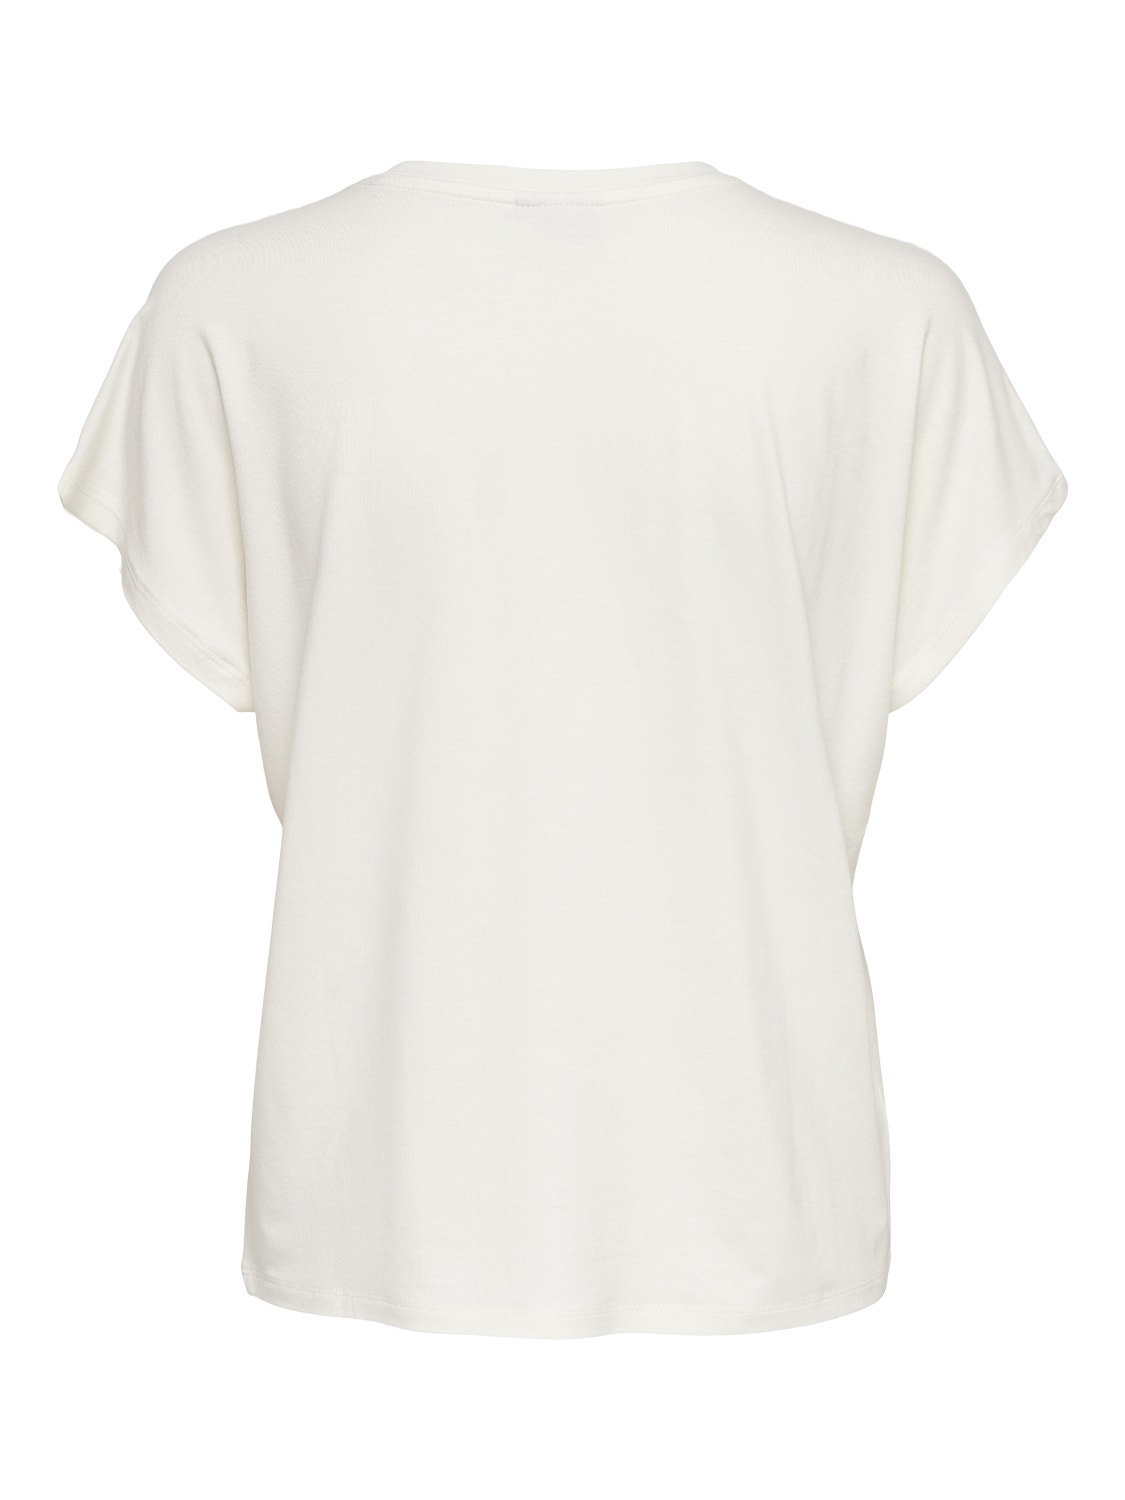 ONLY Einfarbiges T-Shirt -Cloud Dancer - 15257232